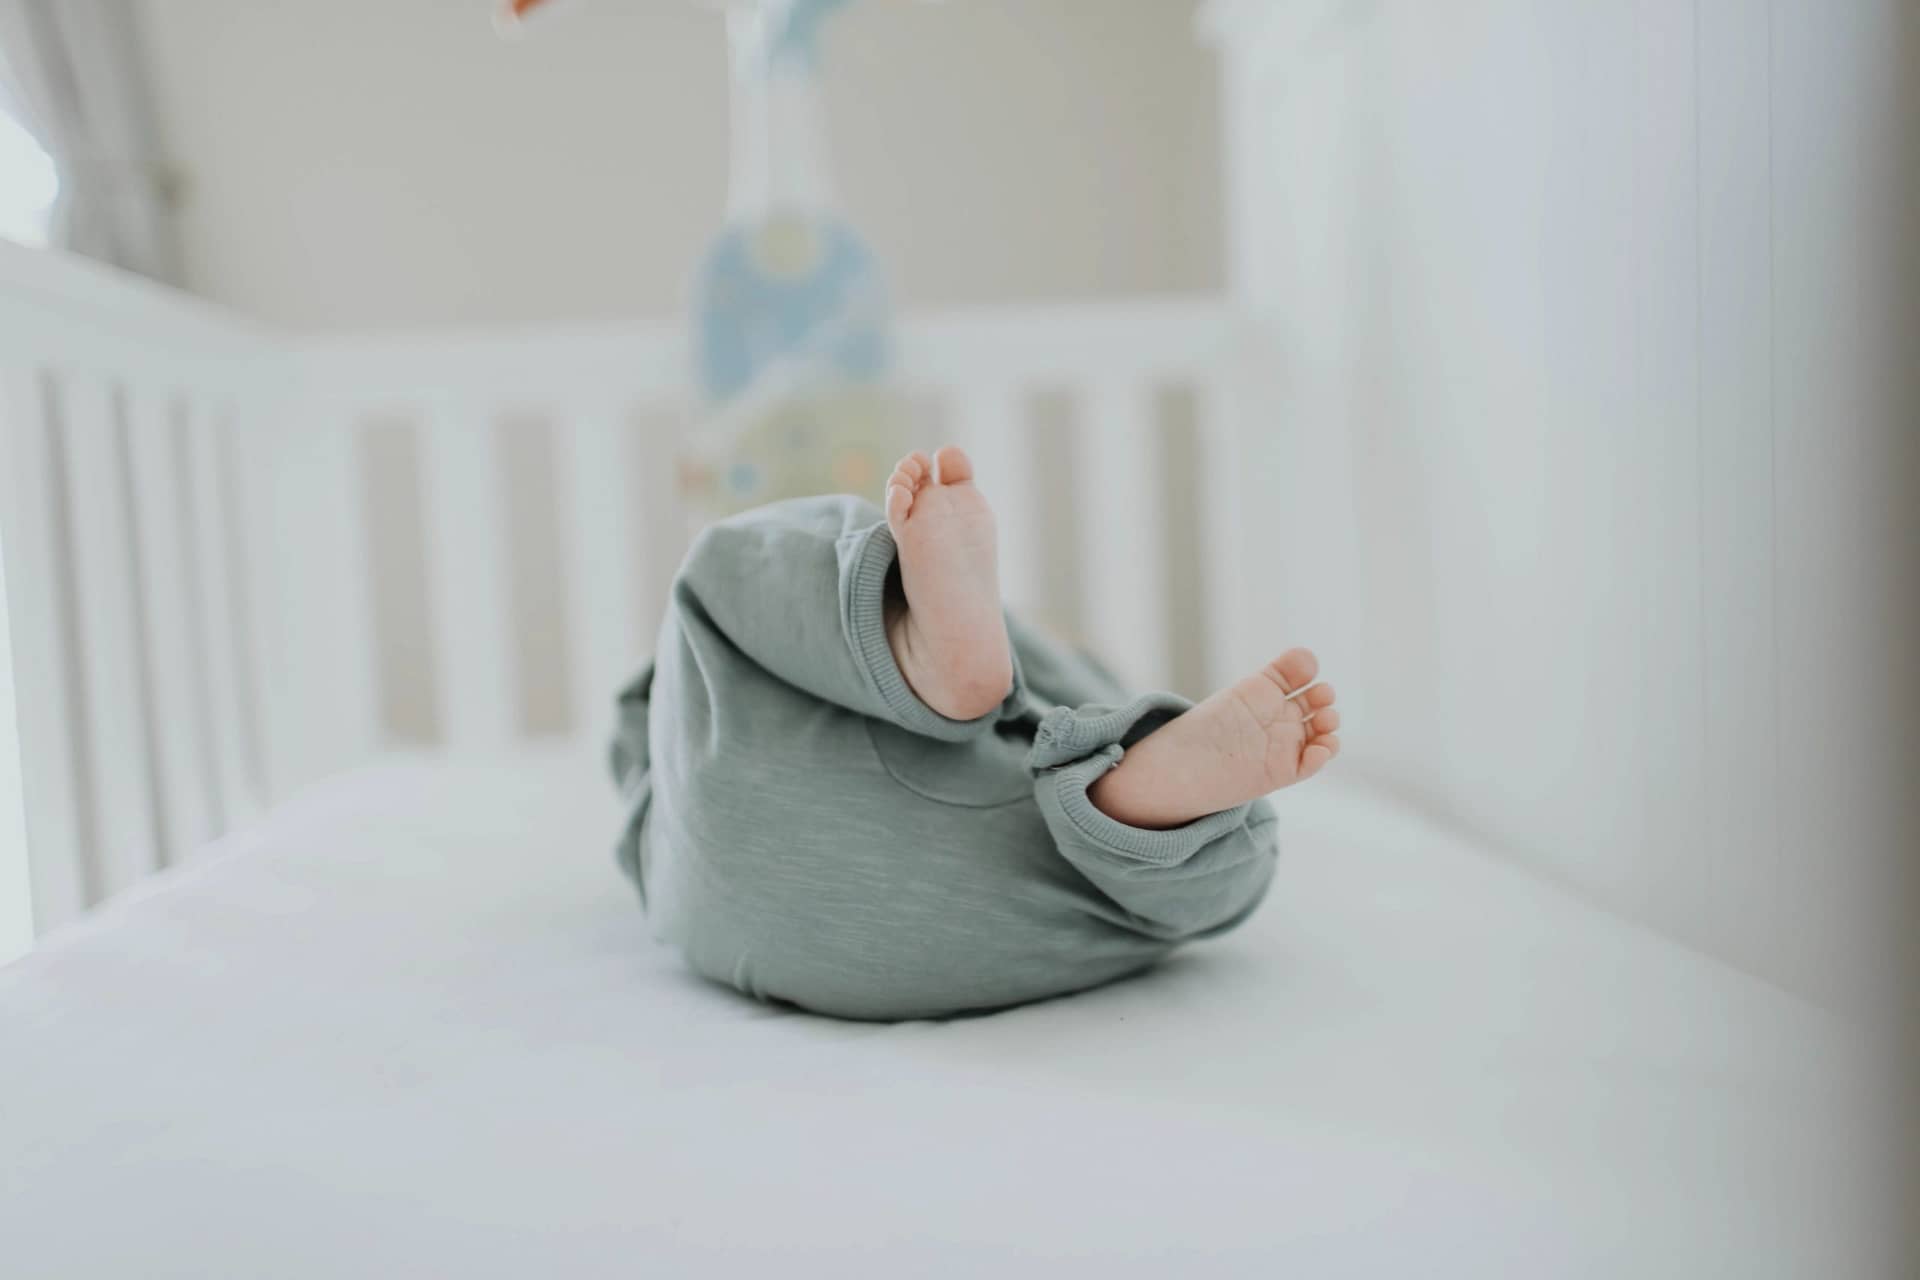 Baby laying in crib on non-toxic mattress